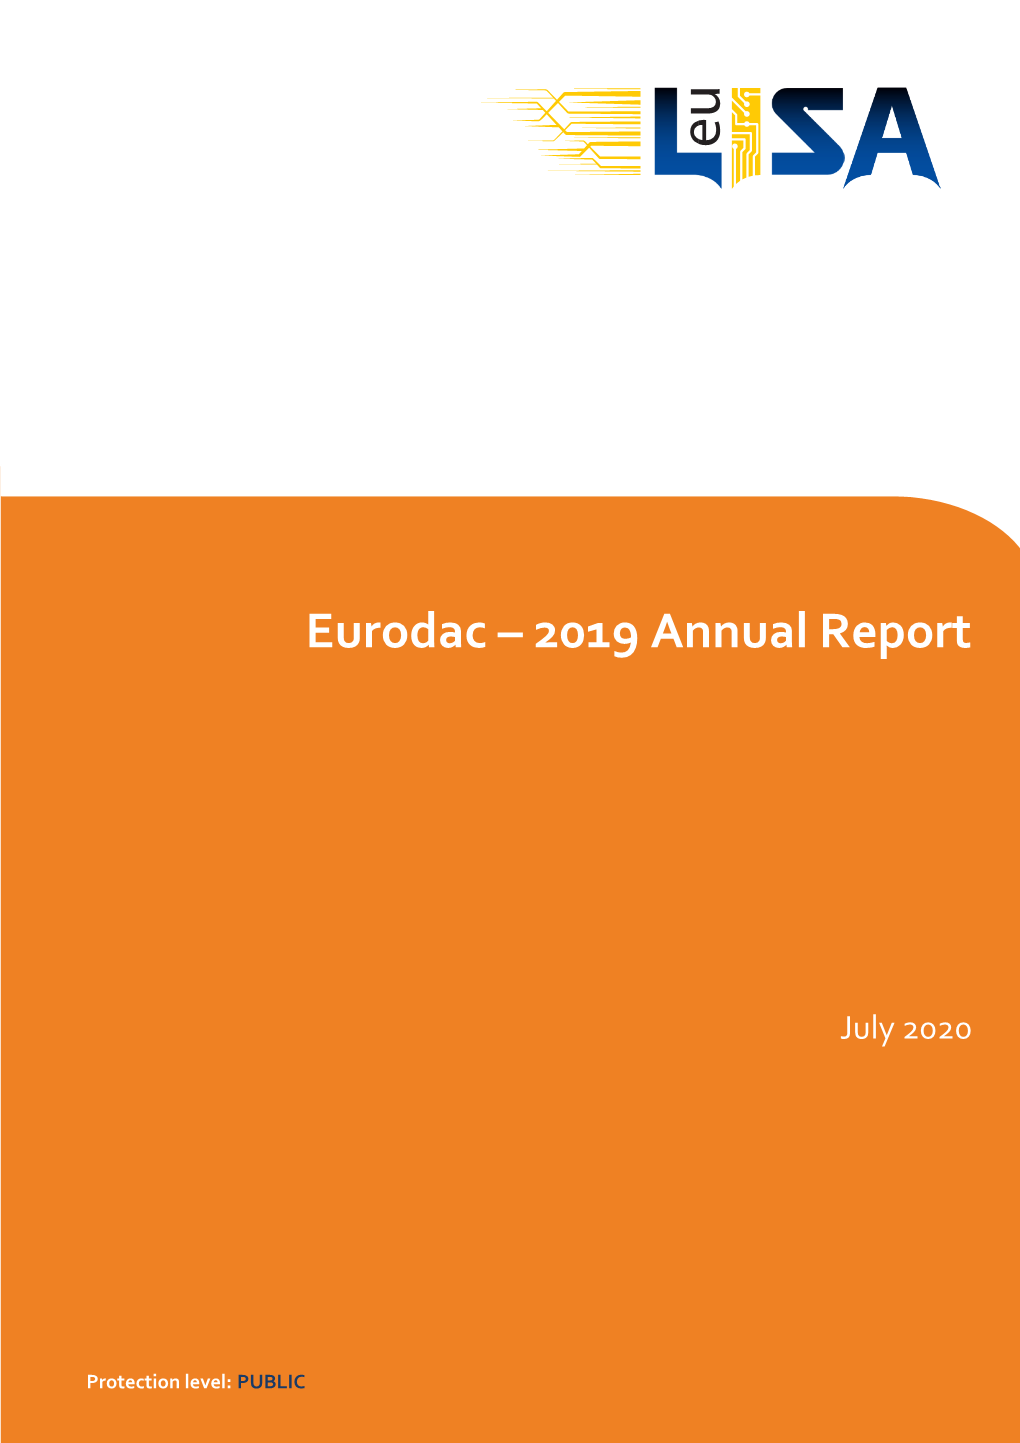 Eurodac Annual Report 2019